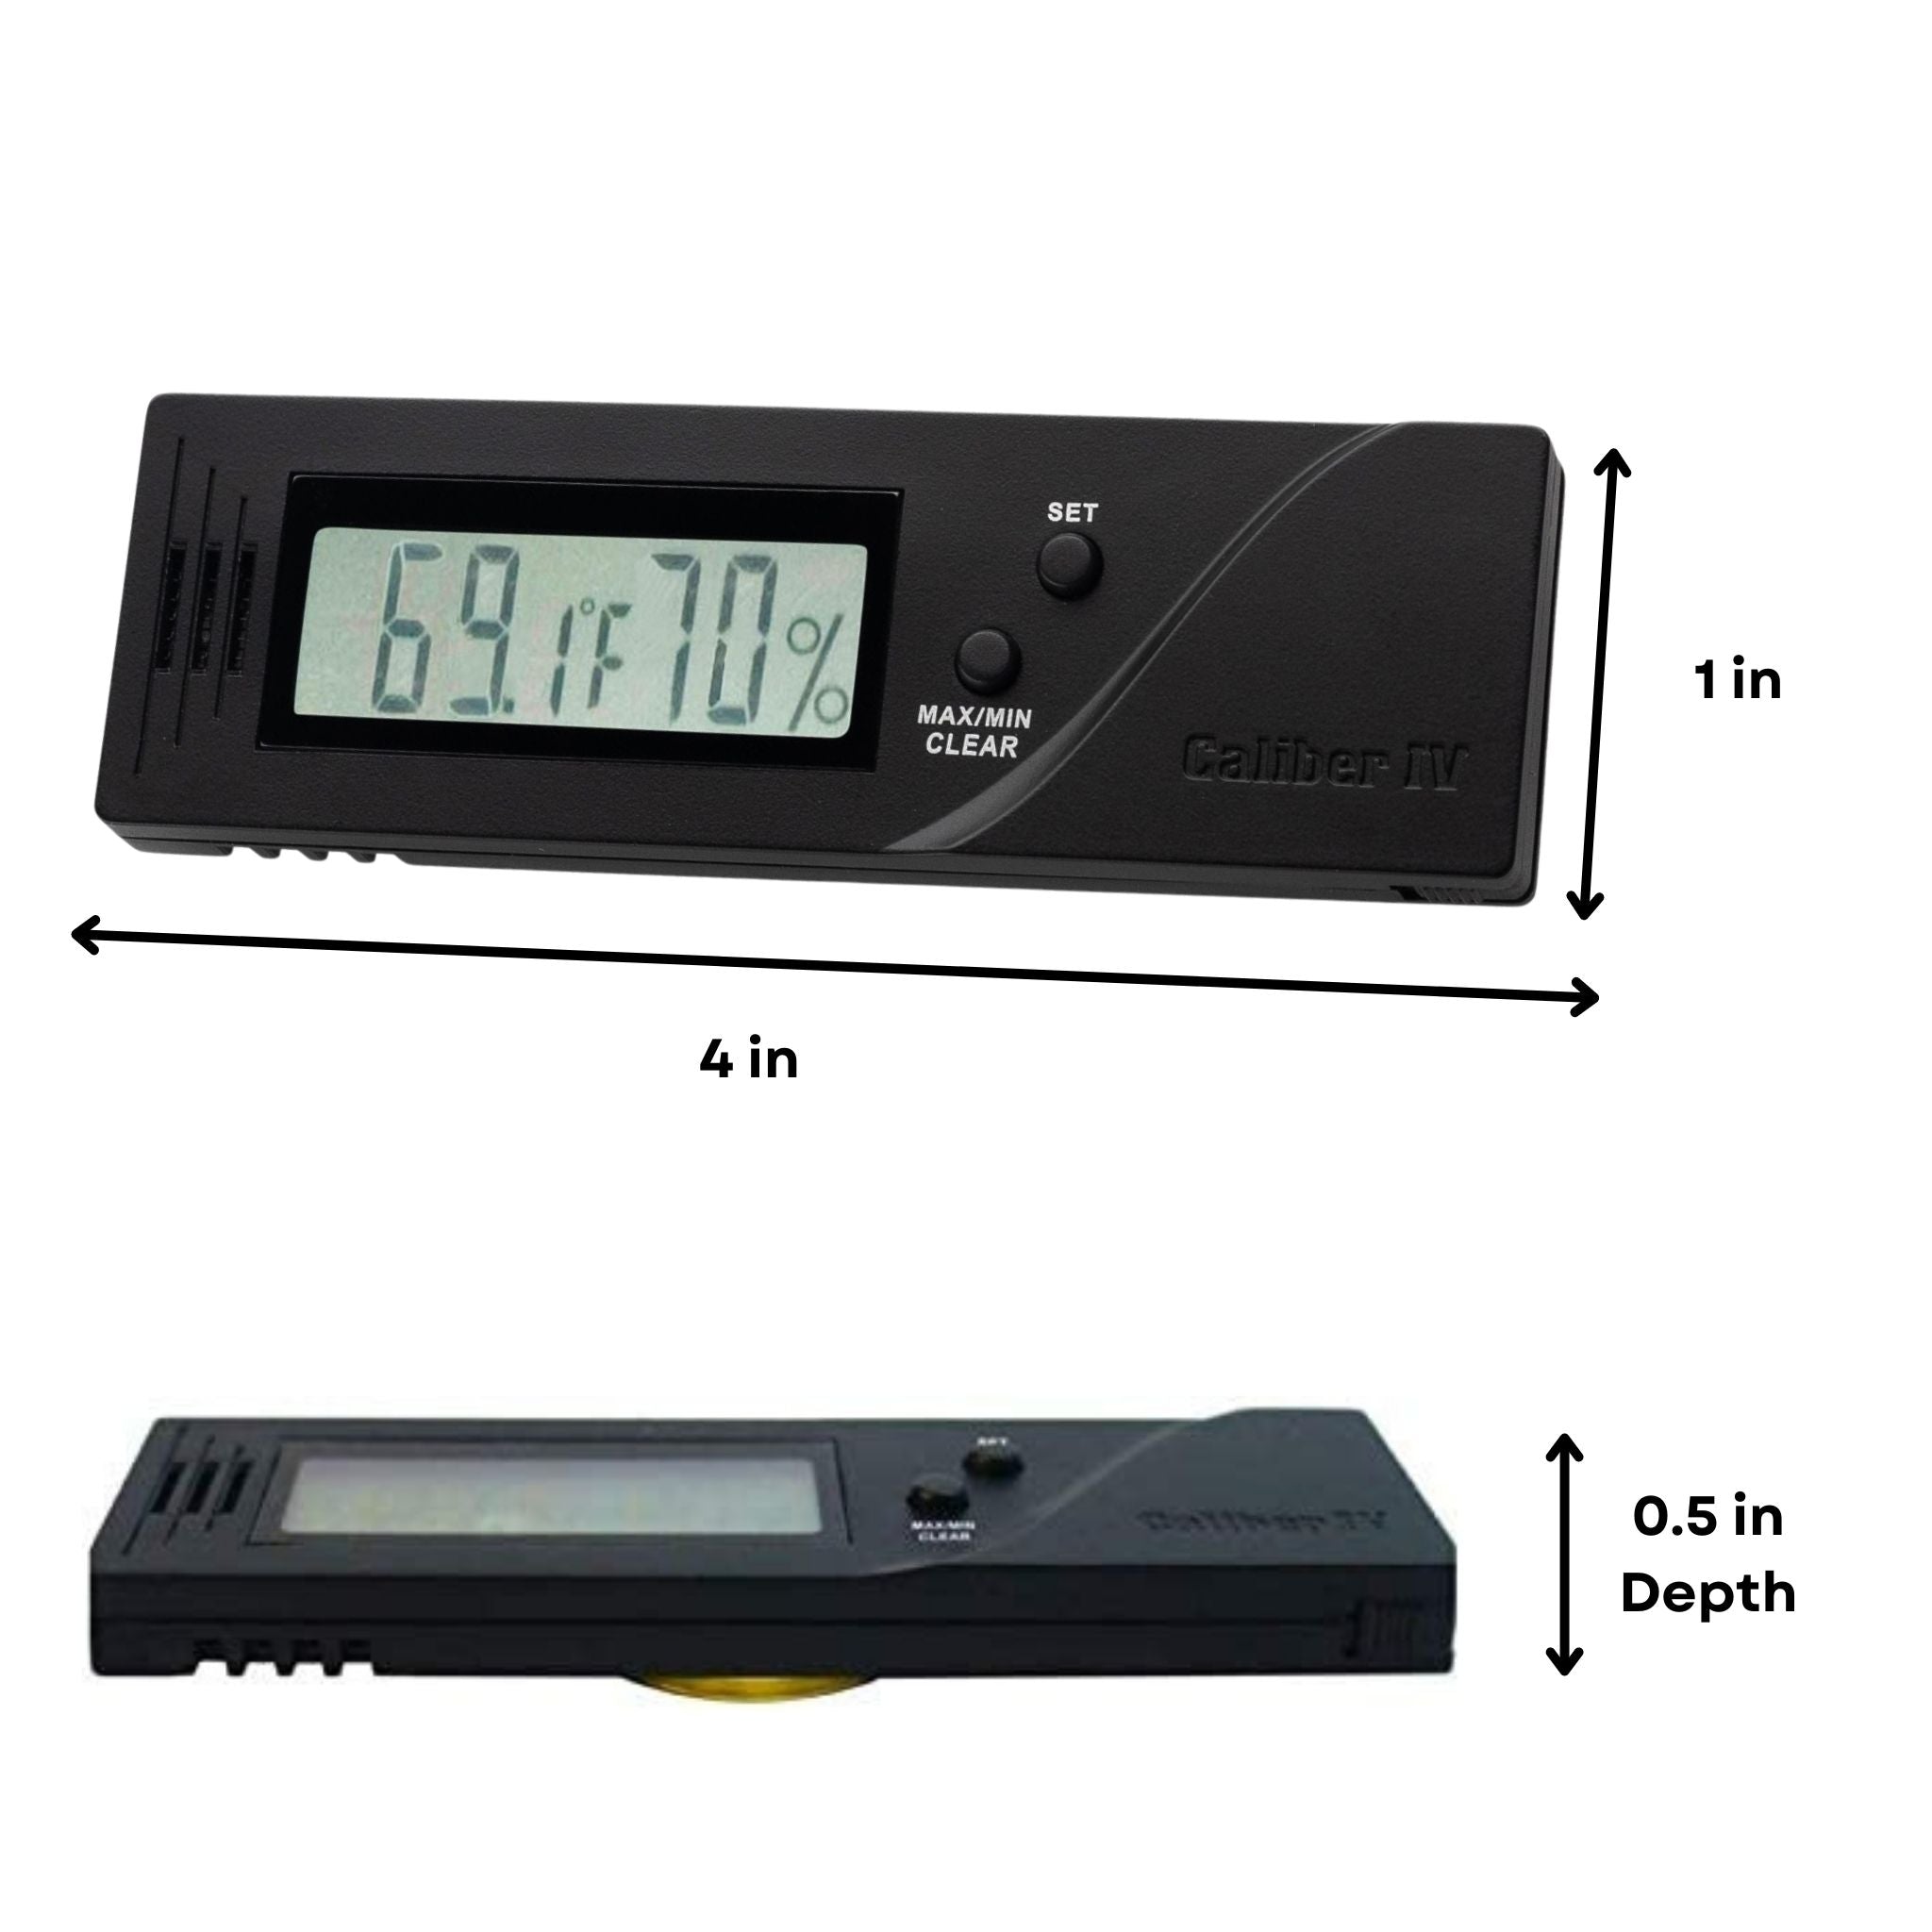 Cigar Hygrometer For Humidors - Large Analog Hygrometer.